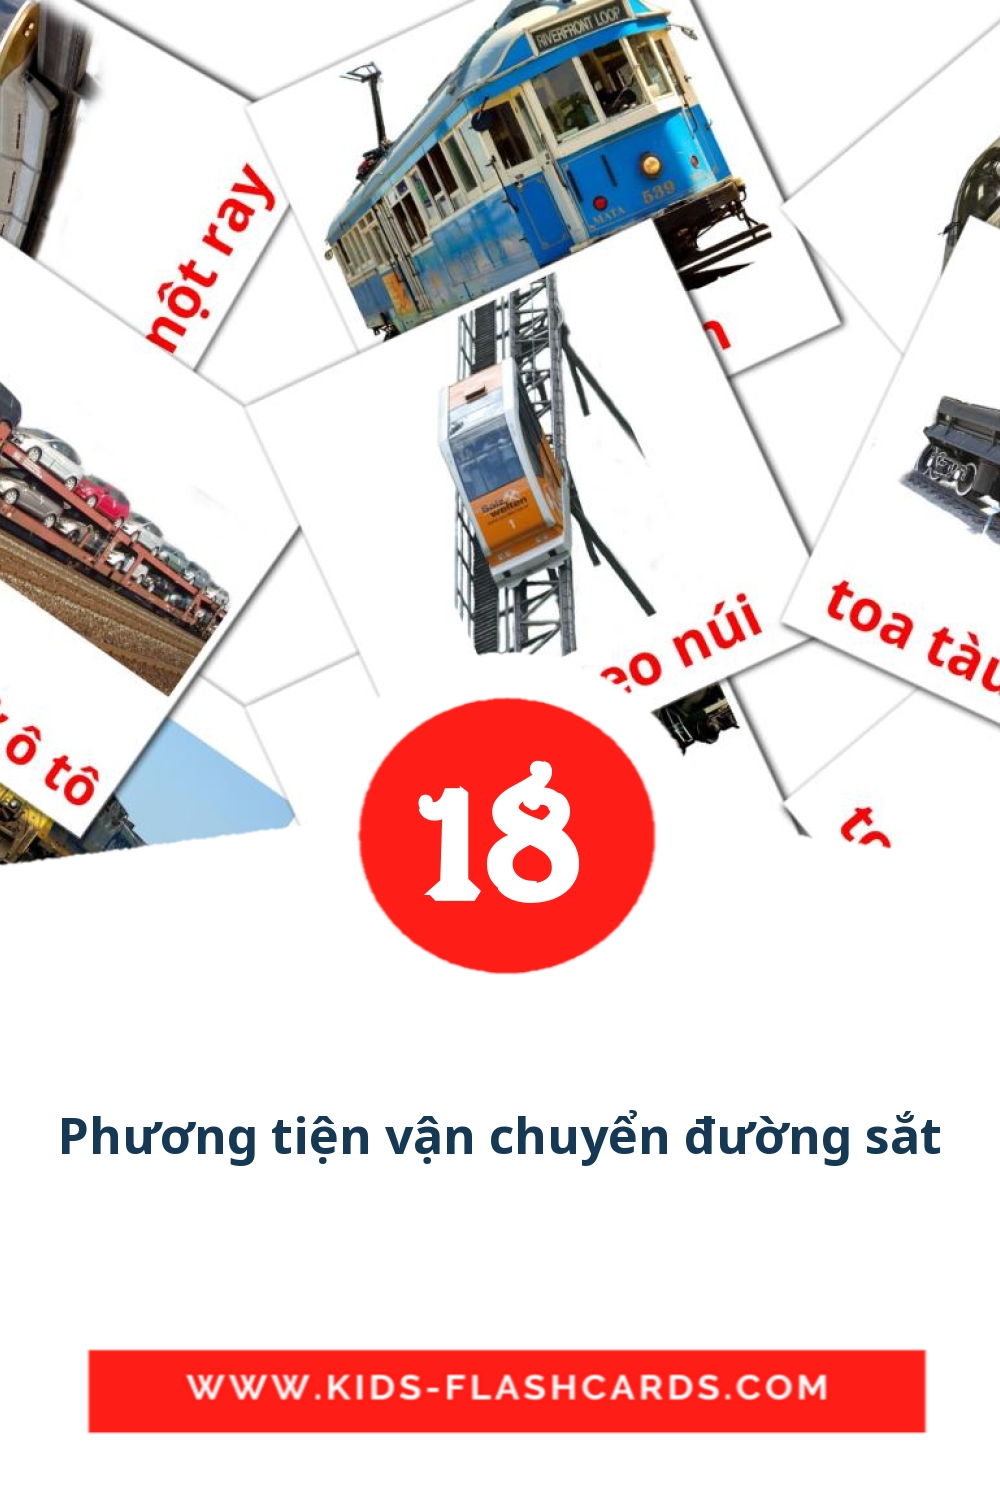 18 carte illustrate di Phương tiện vận chuyển đường sắt per la scuola materna in vietnamita